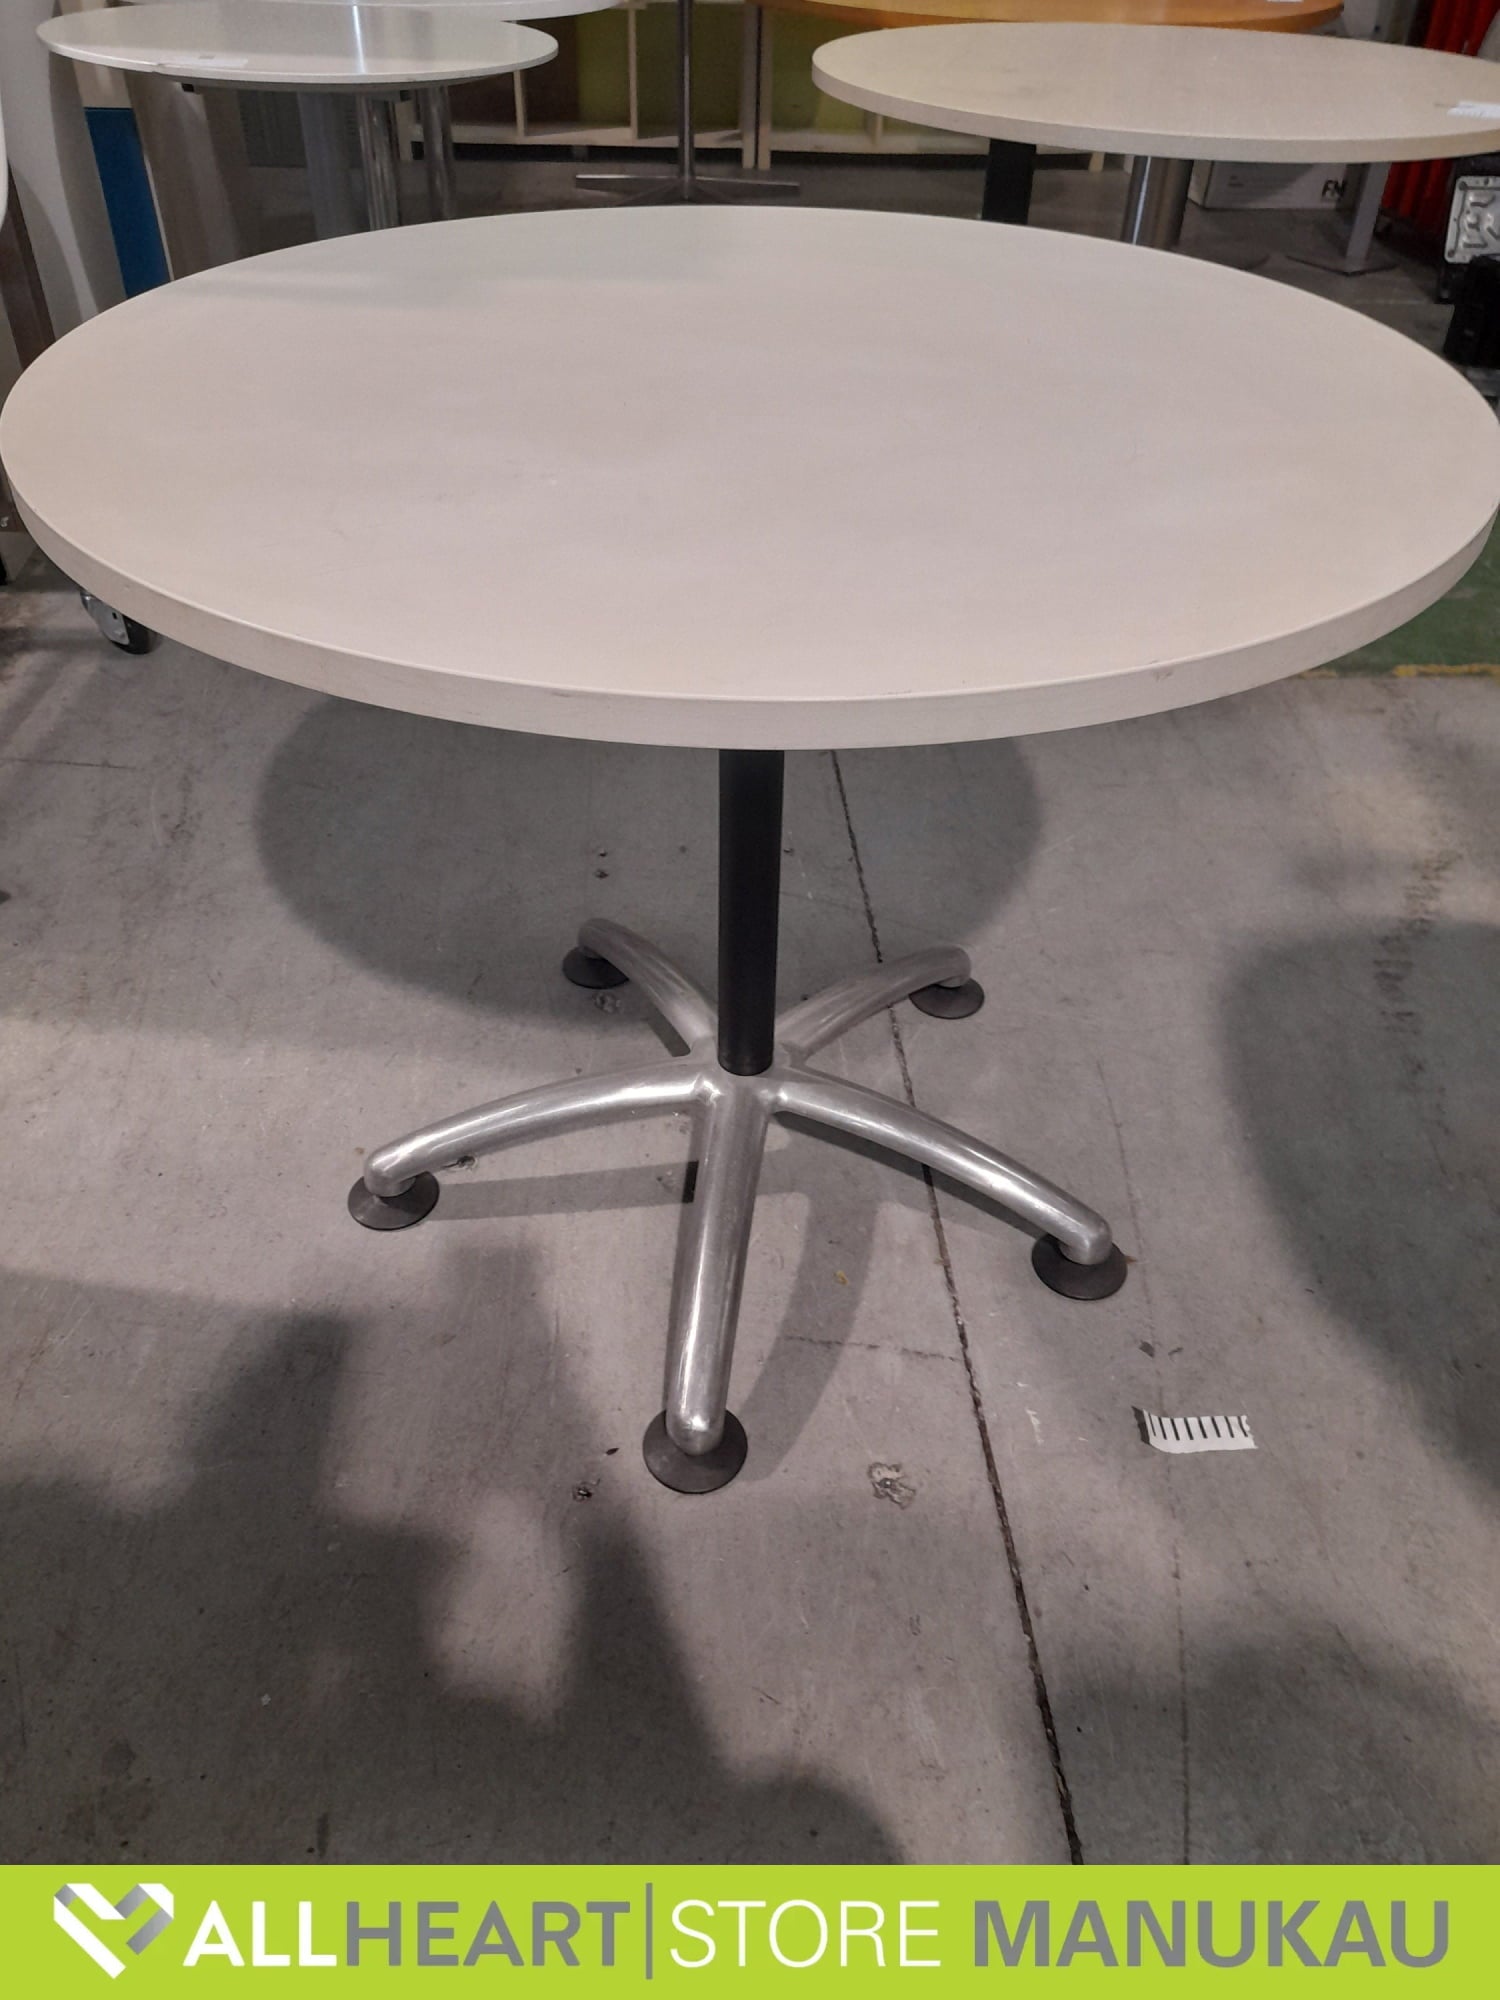 900mm DIA - Round Table White Top